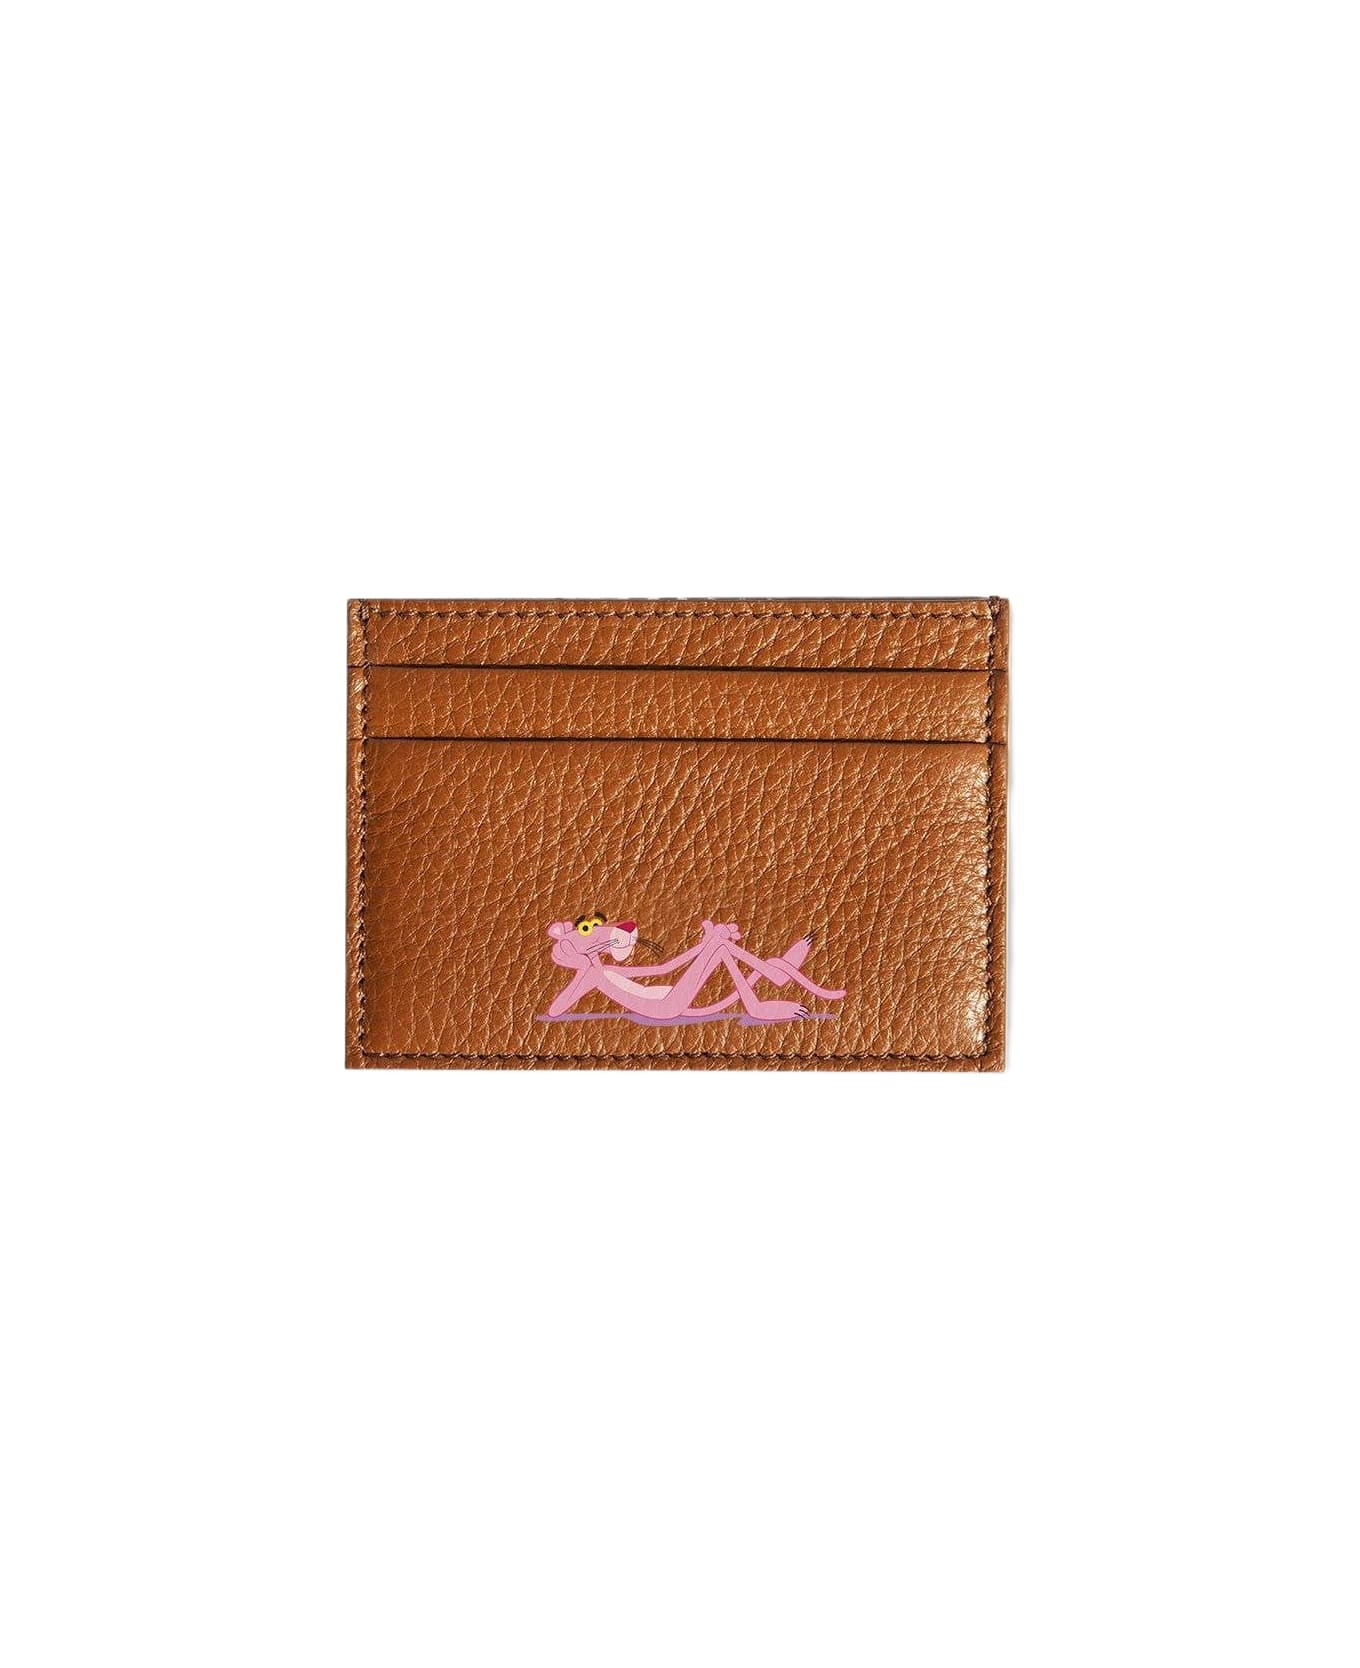 Larusmiani Card Holder 'pink Panther' Wallet - Sienna 財布